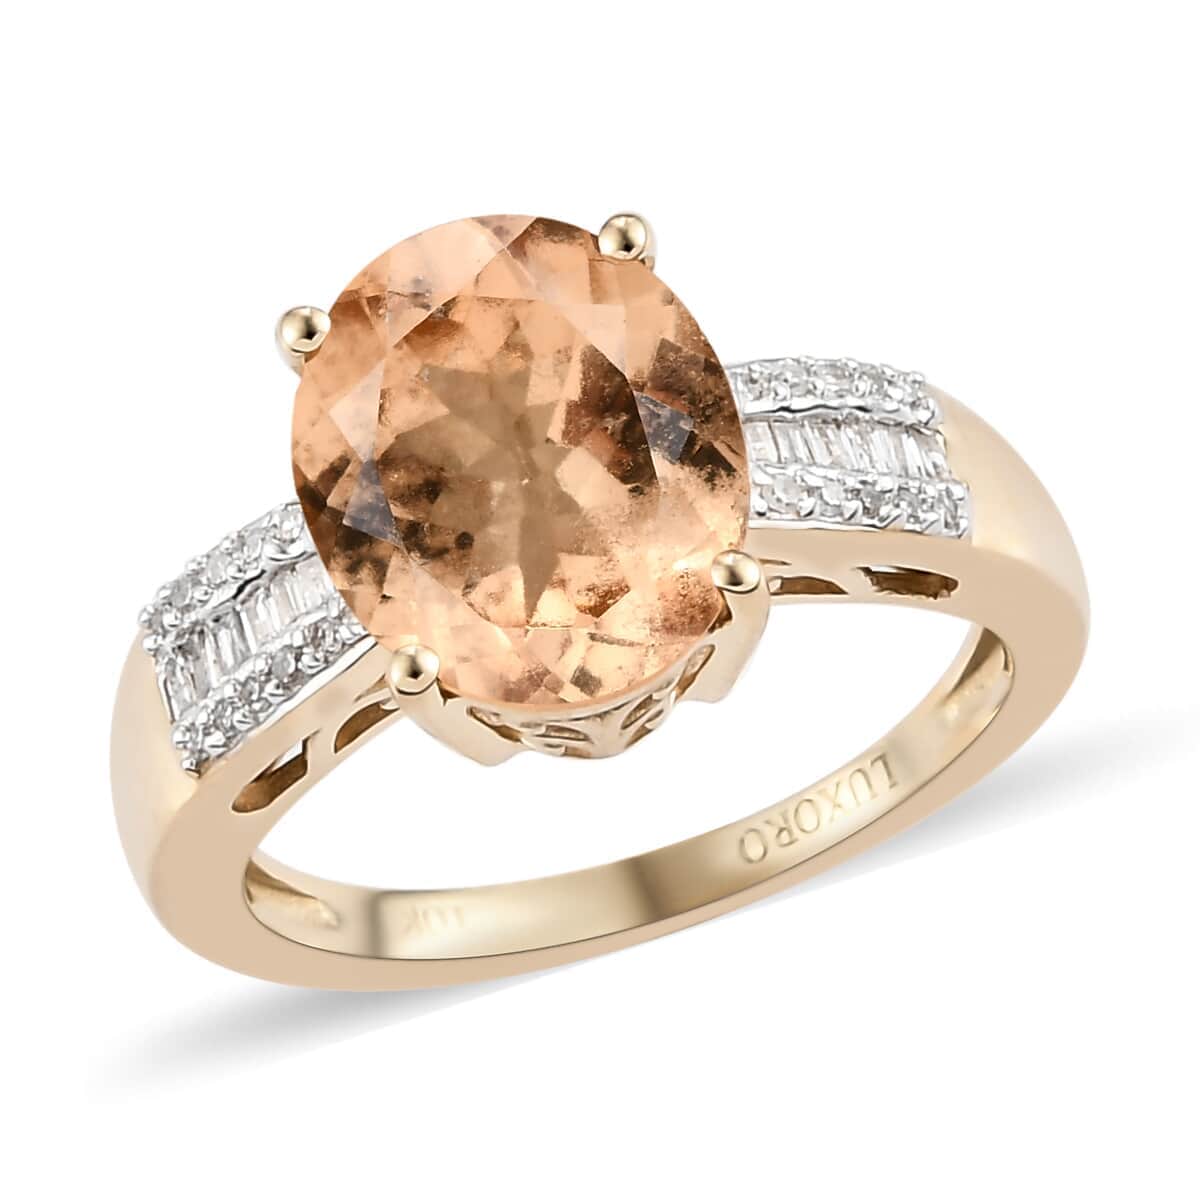 Luxoro 10K Yellow Gold Premium Ceylon Imperial Garnet and G-H I3 Diamond Ring (Size 9.0) 4.10 ctw image number 0